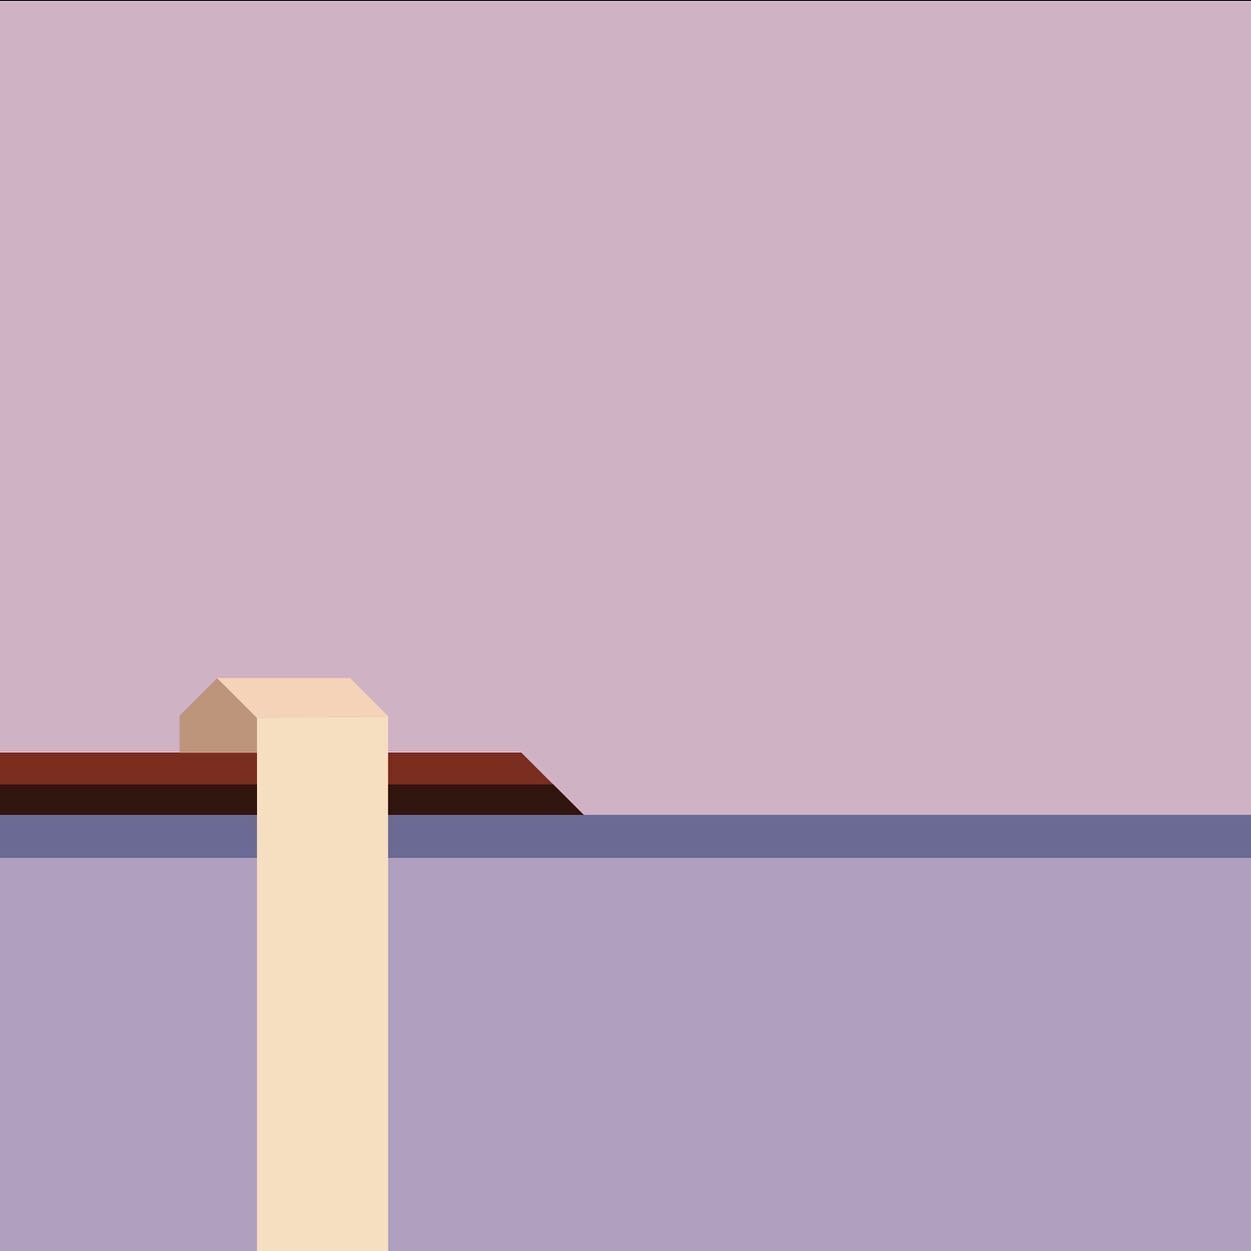 Lake house
.
.
.

#illustration #Illustrate #minimalist #color #flat #lines #object #illustrator #city #instagram #apple #creative #purple #house #colorful #sky #landscape